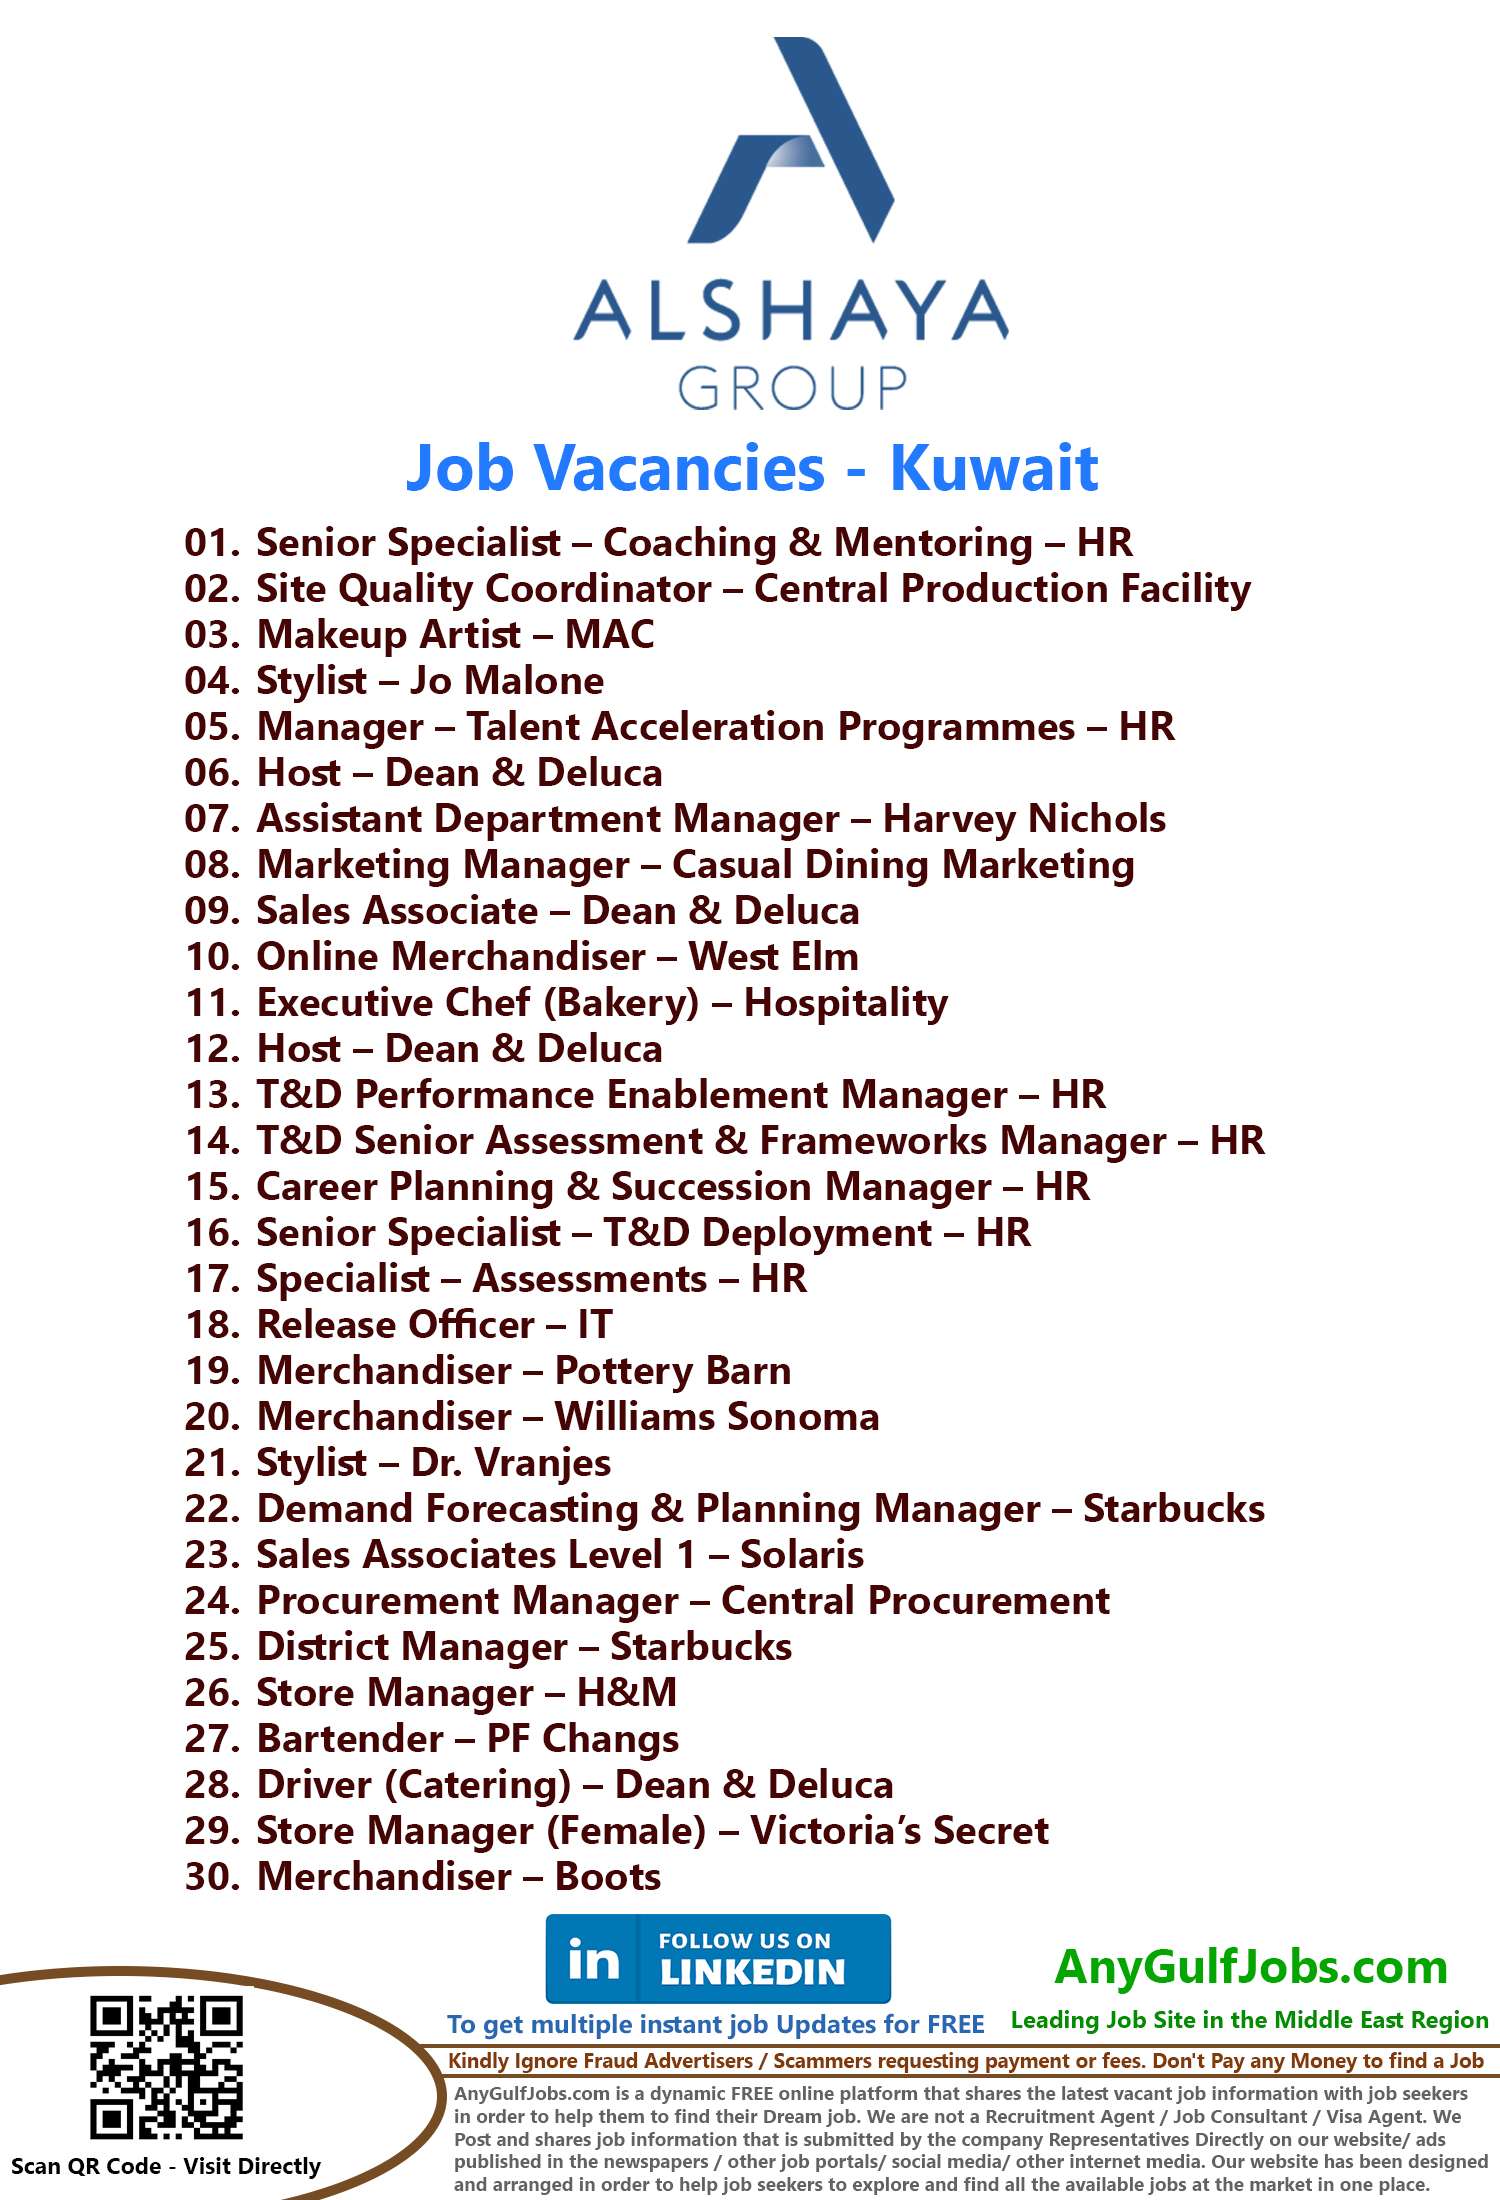 Alshaya Group Job Vacancies - Kuwait